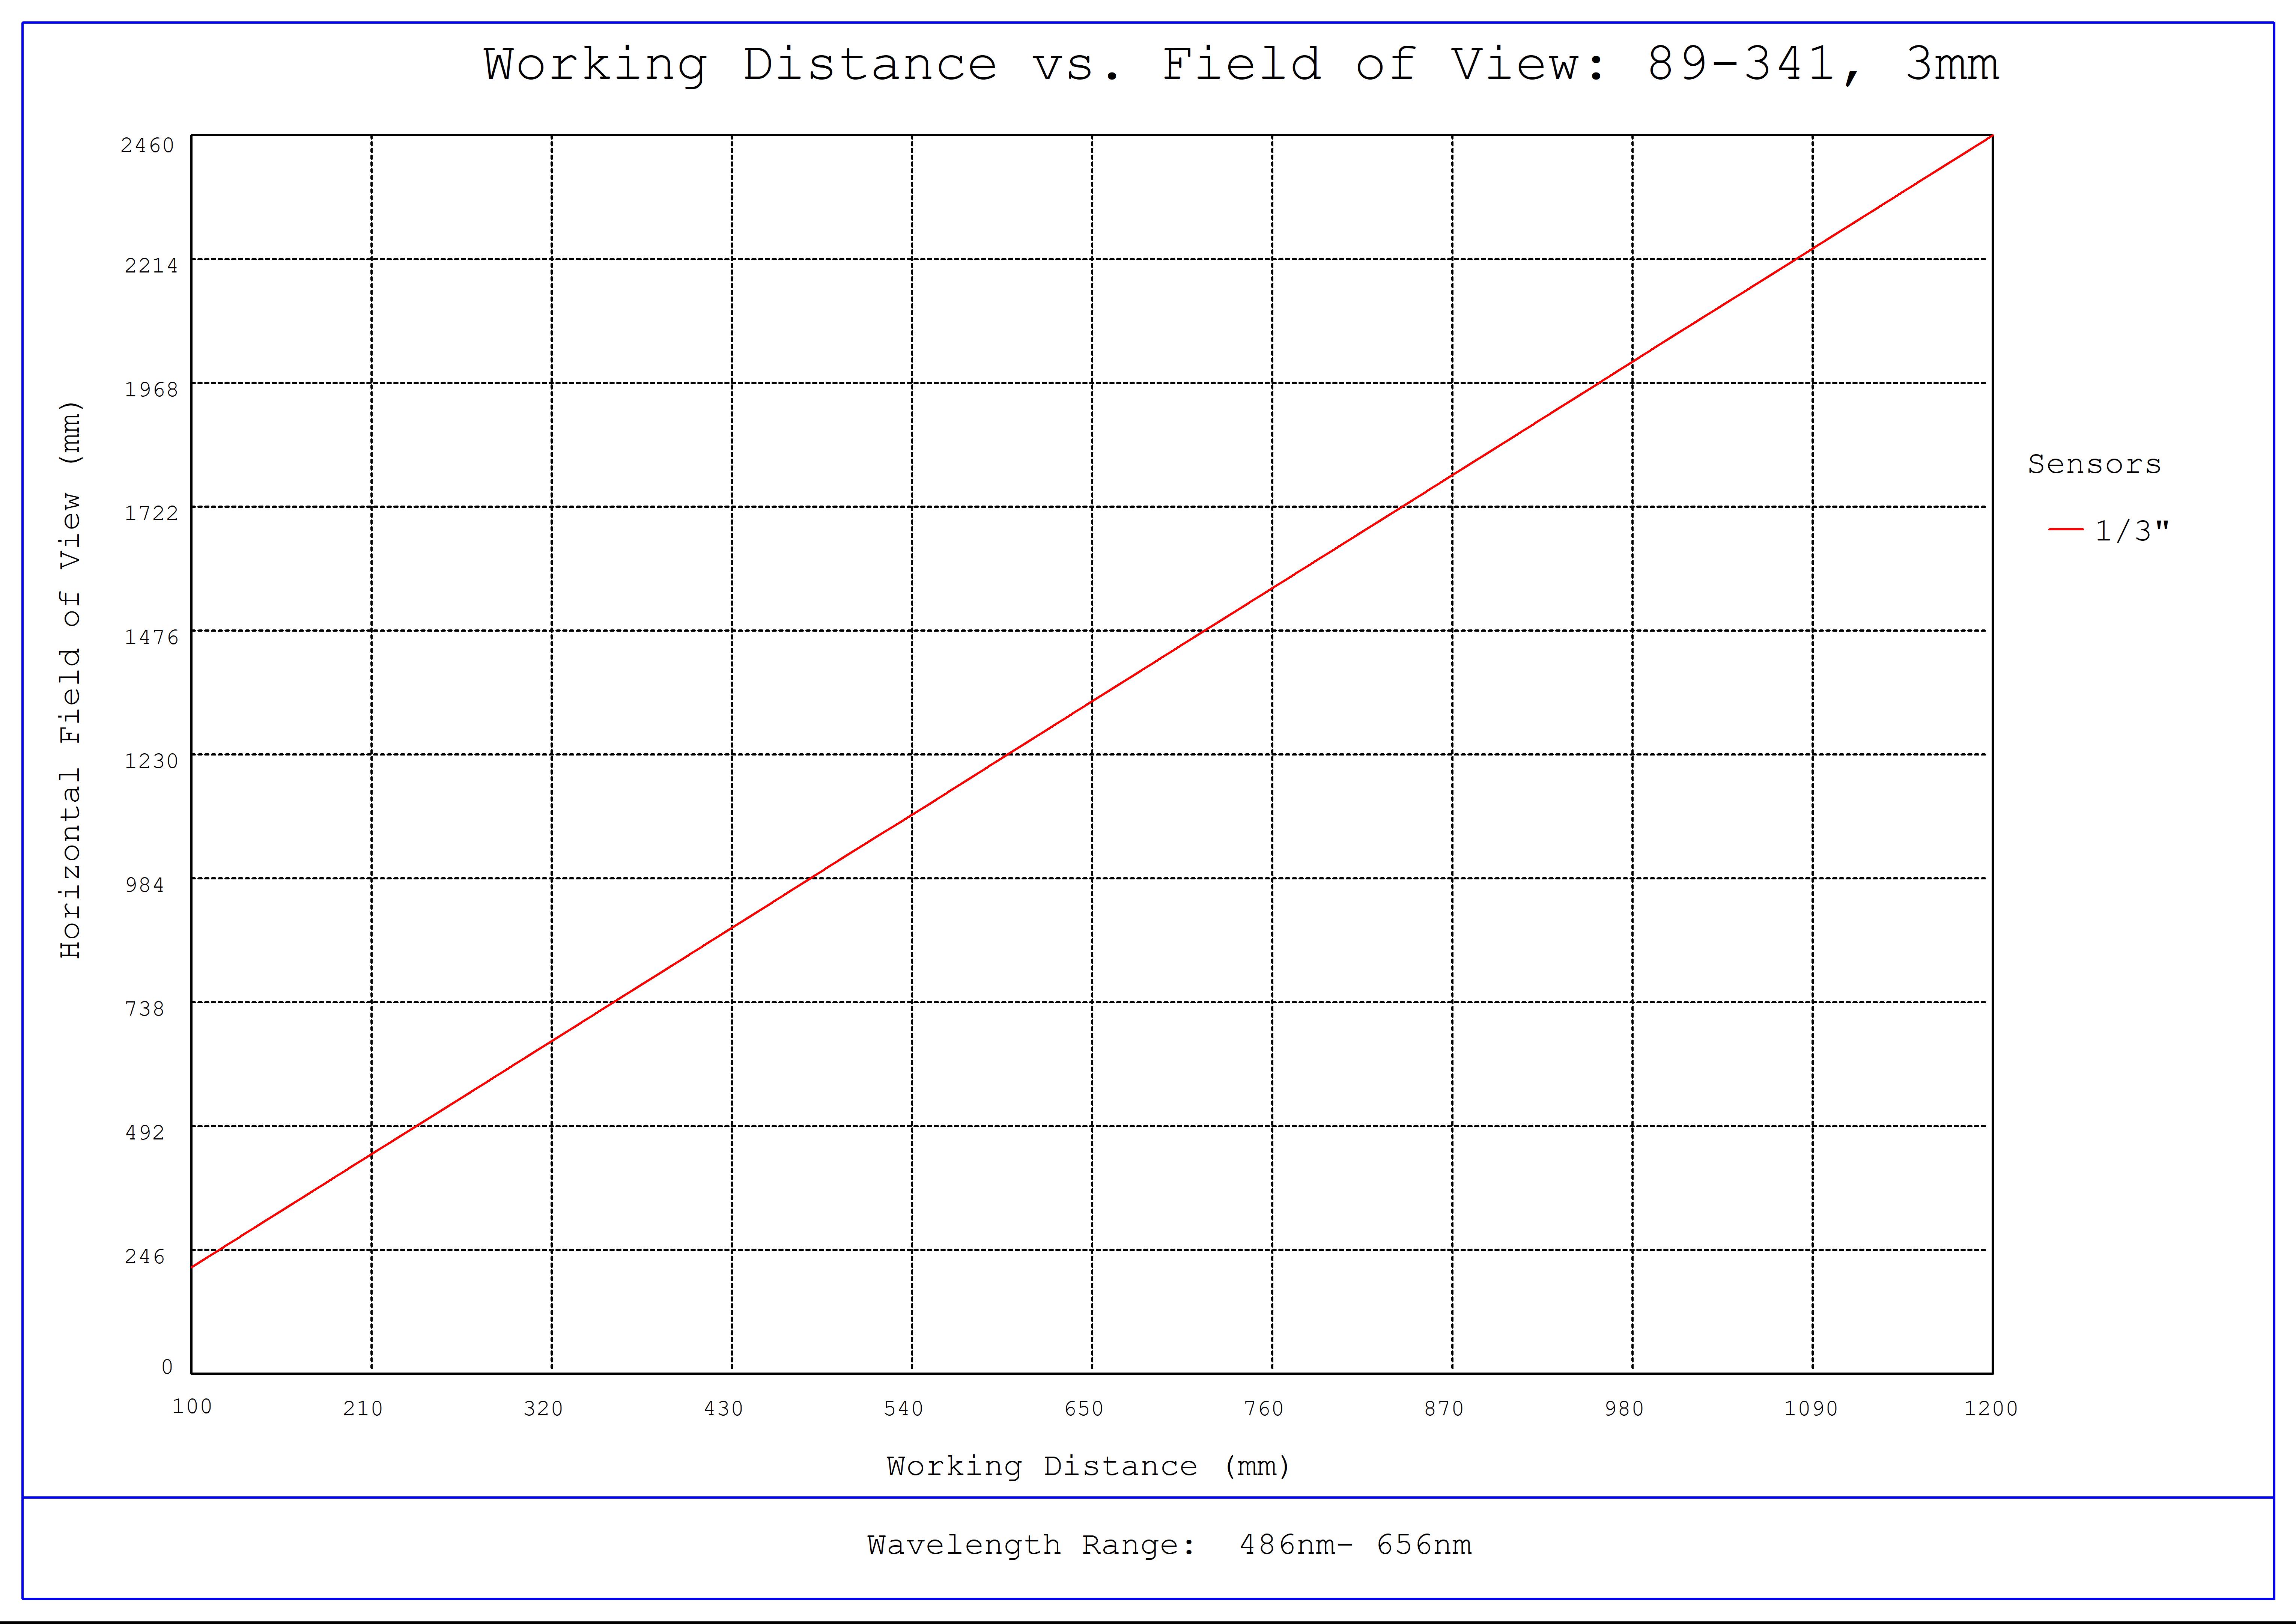 #89-341, 3mm FL f/4.0, Blue Series M12 Lens, Working Distance versus Field of View Plot